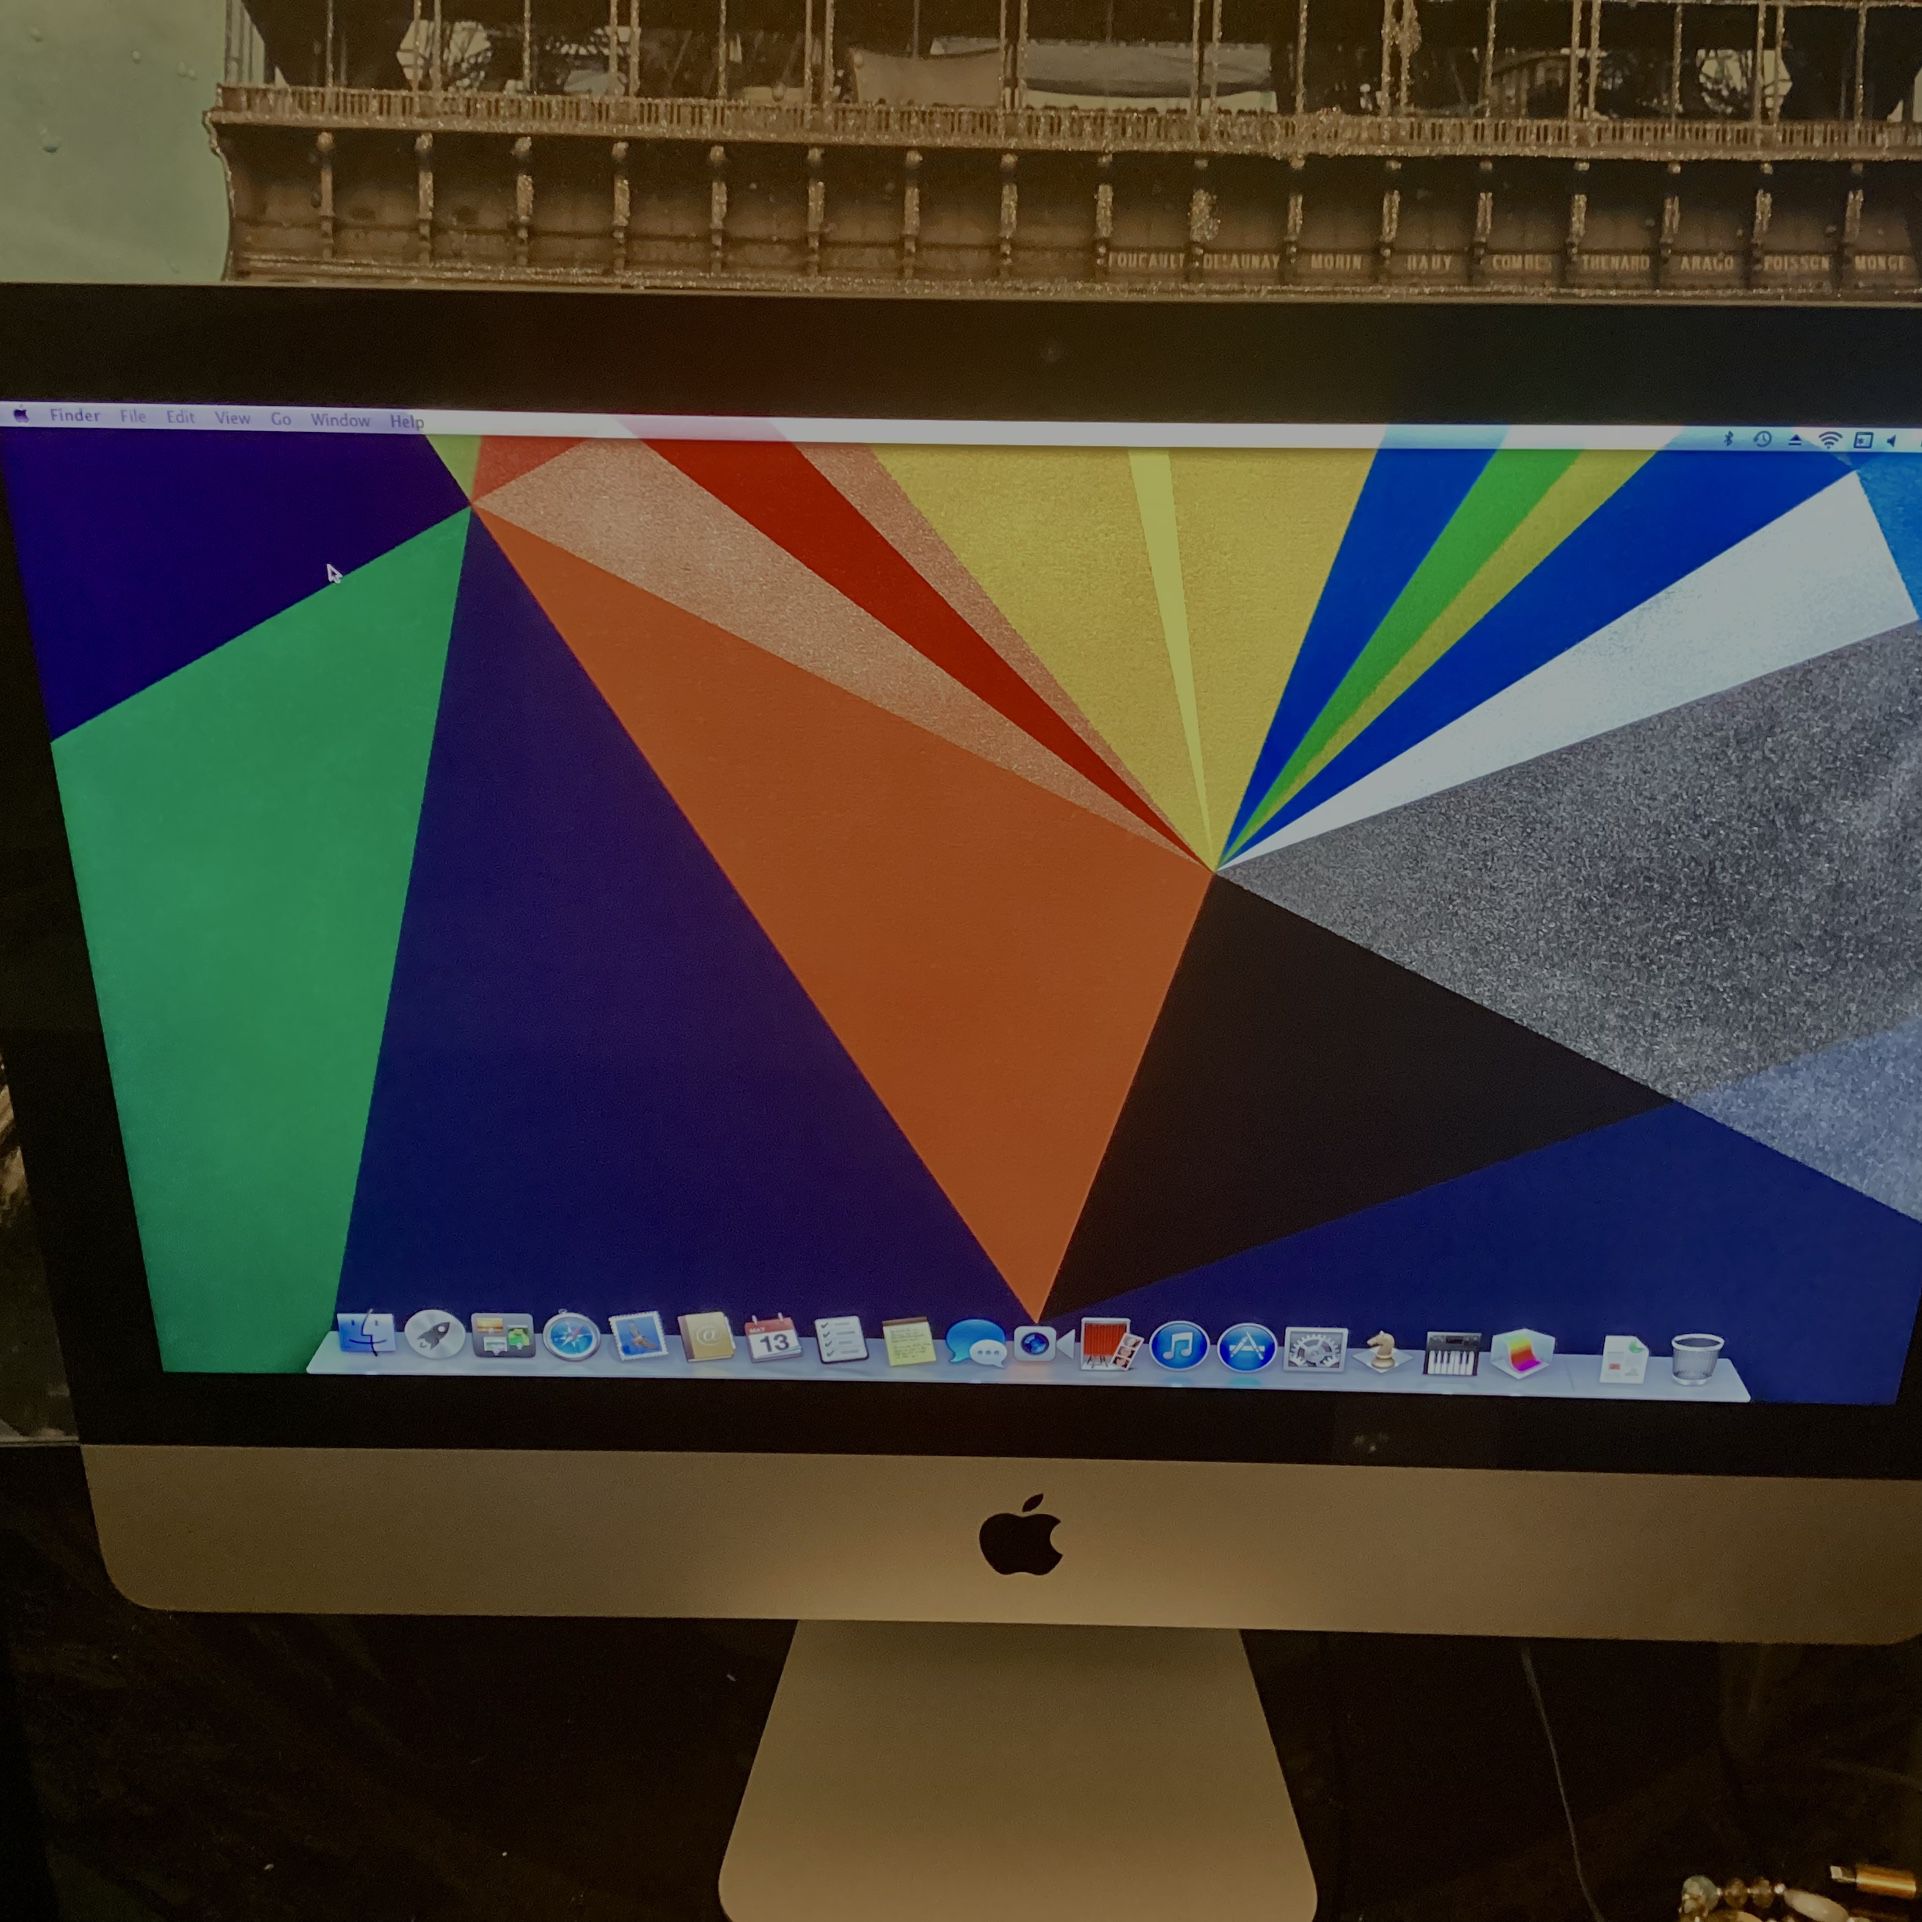 iMac 2013 